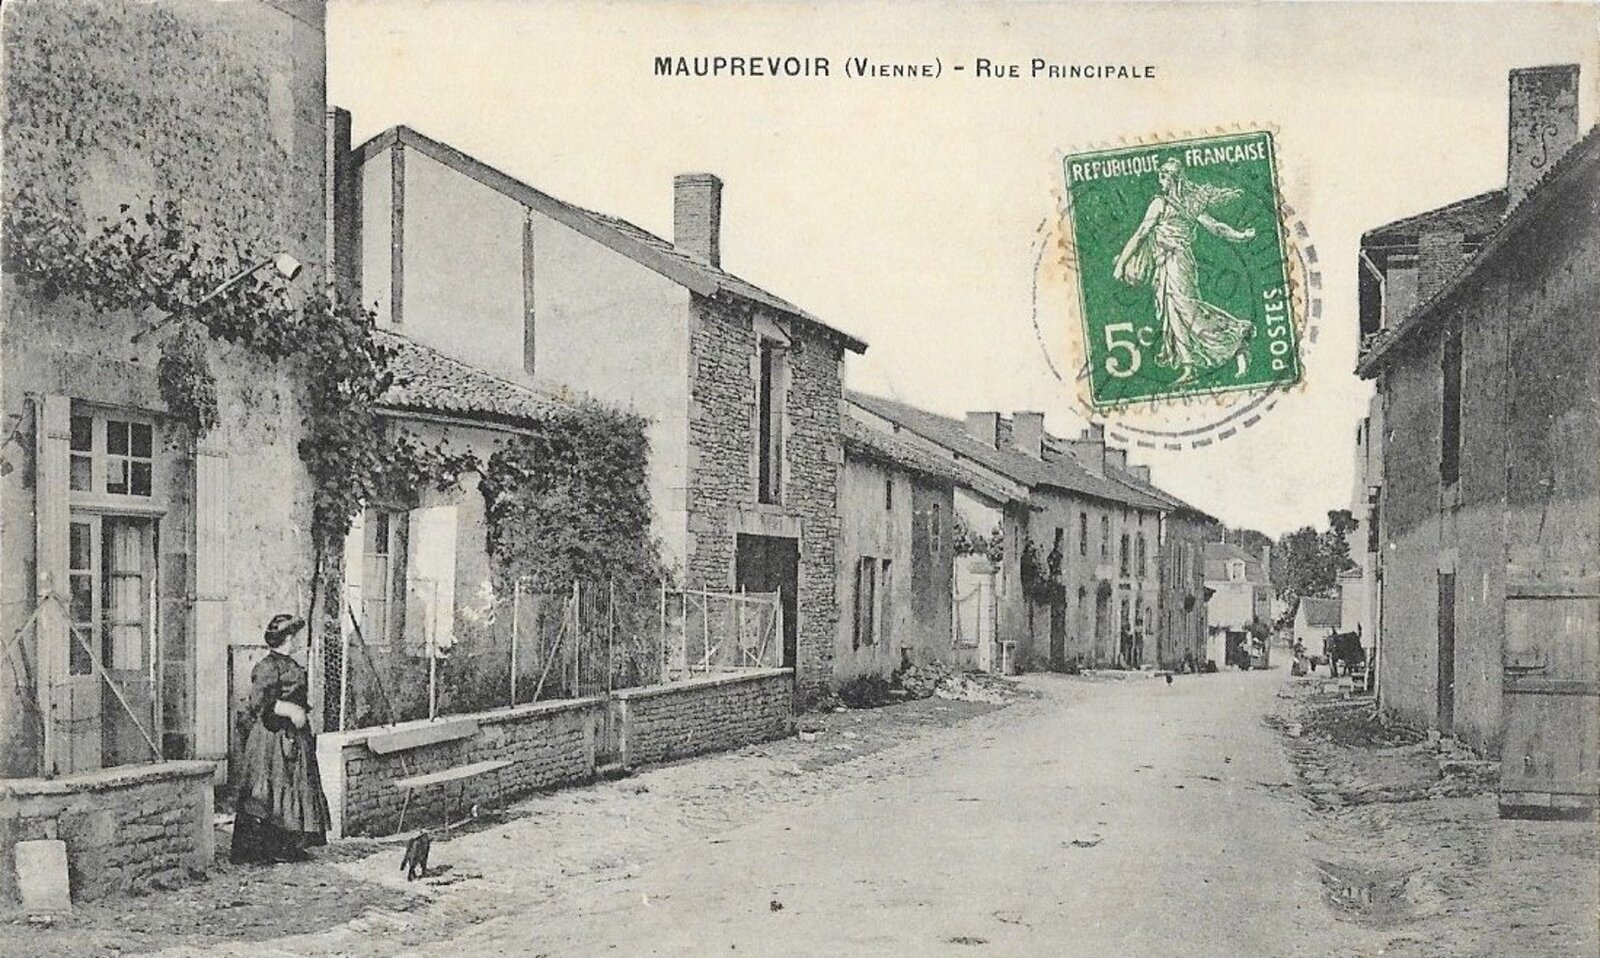 Postcard of Mauprévoir's main street, 1910 (Geneanet)